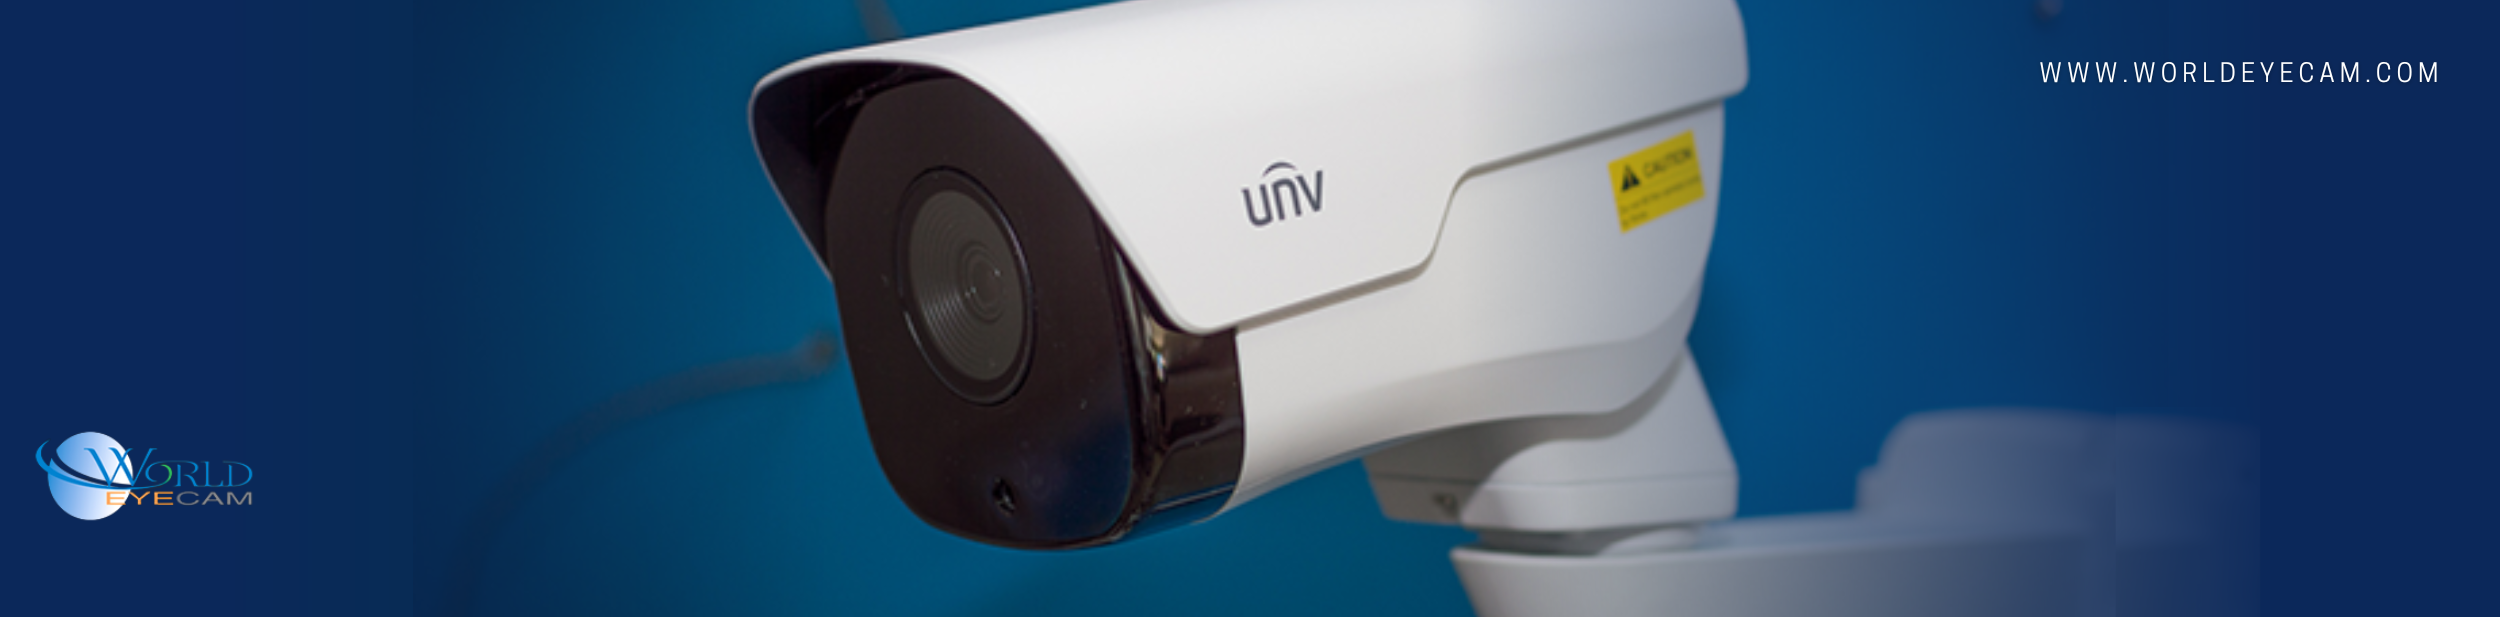 UNV Uniview IP Cameras